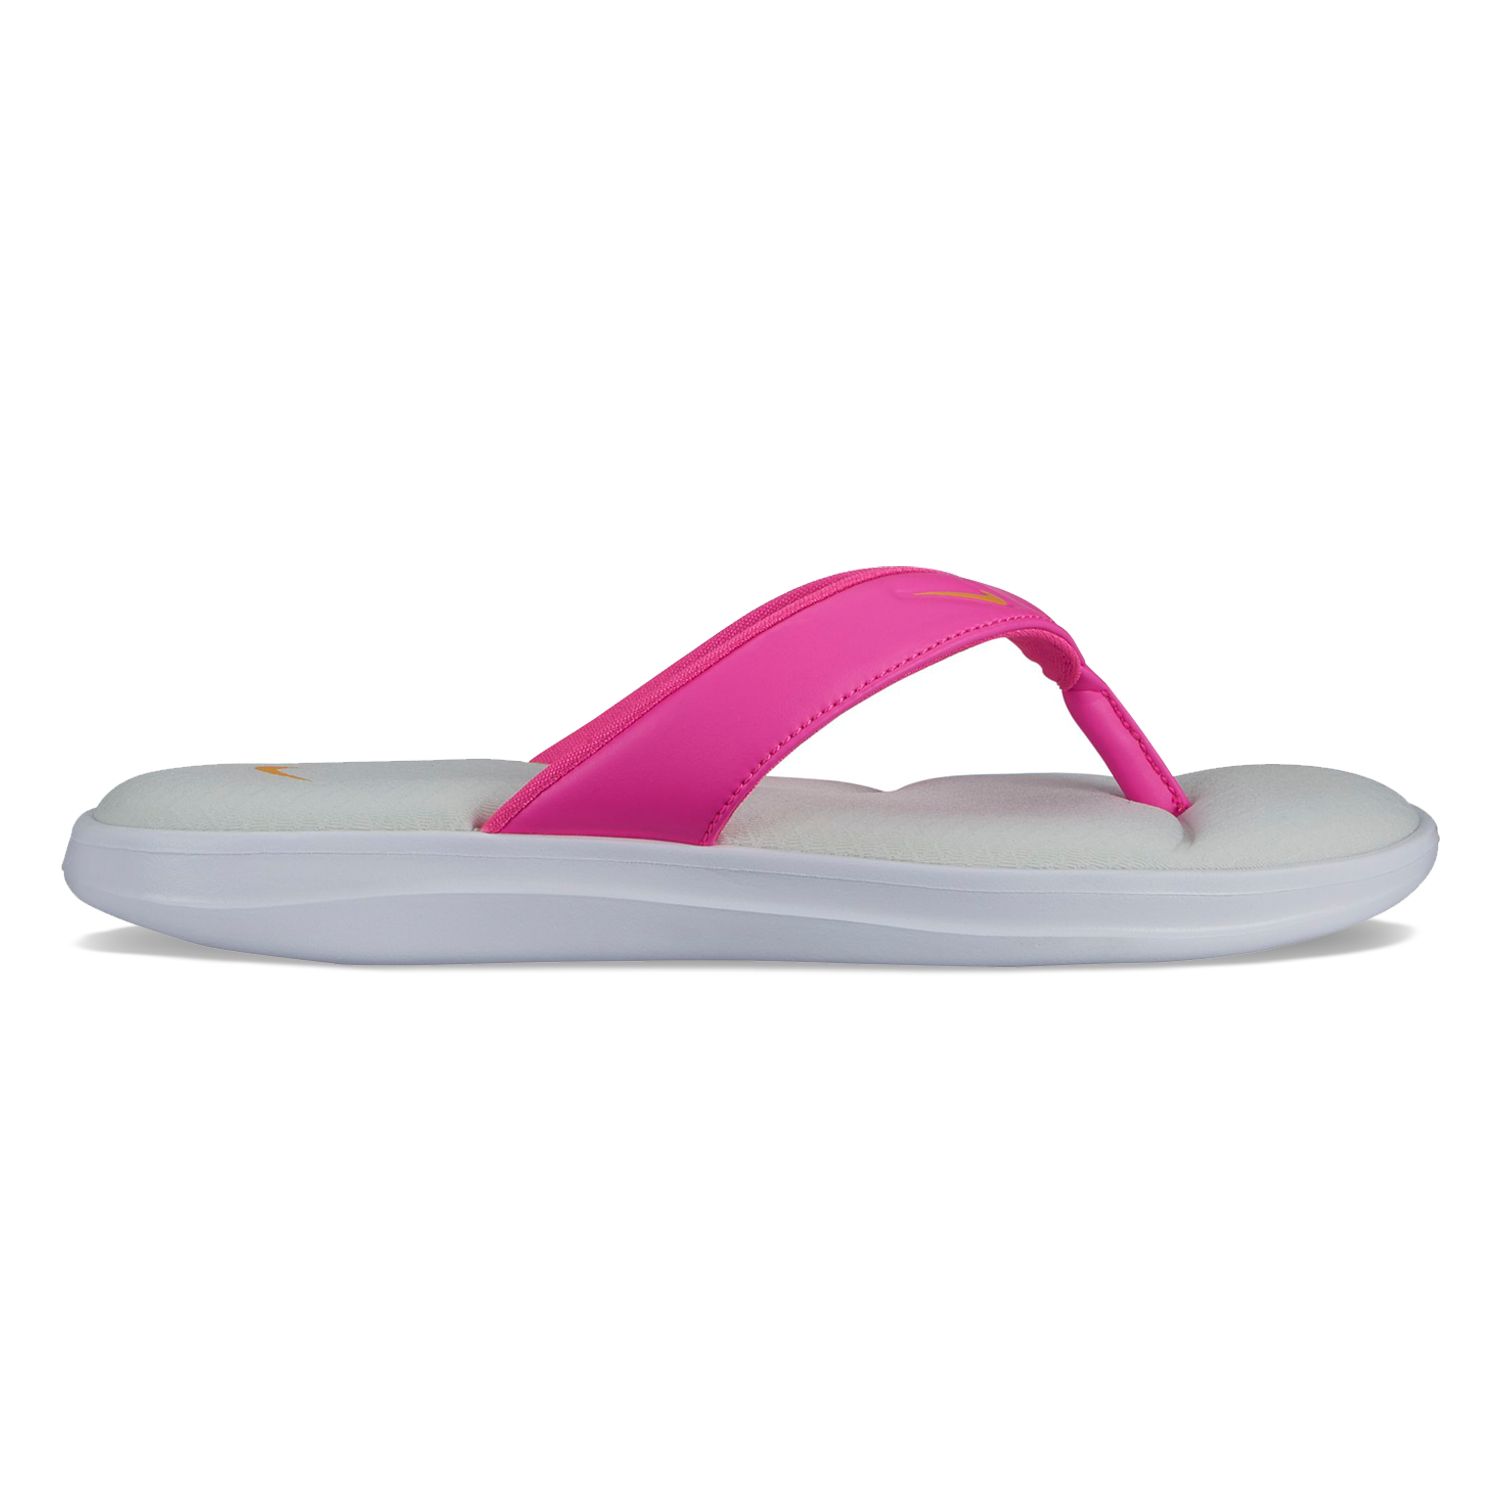 women's nike ultra comfort sandals